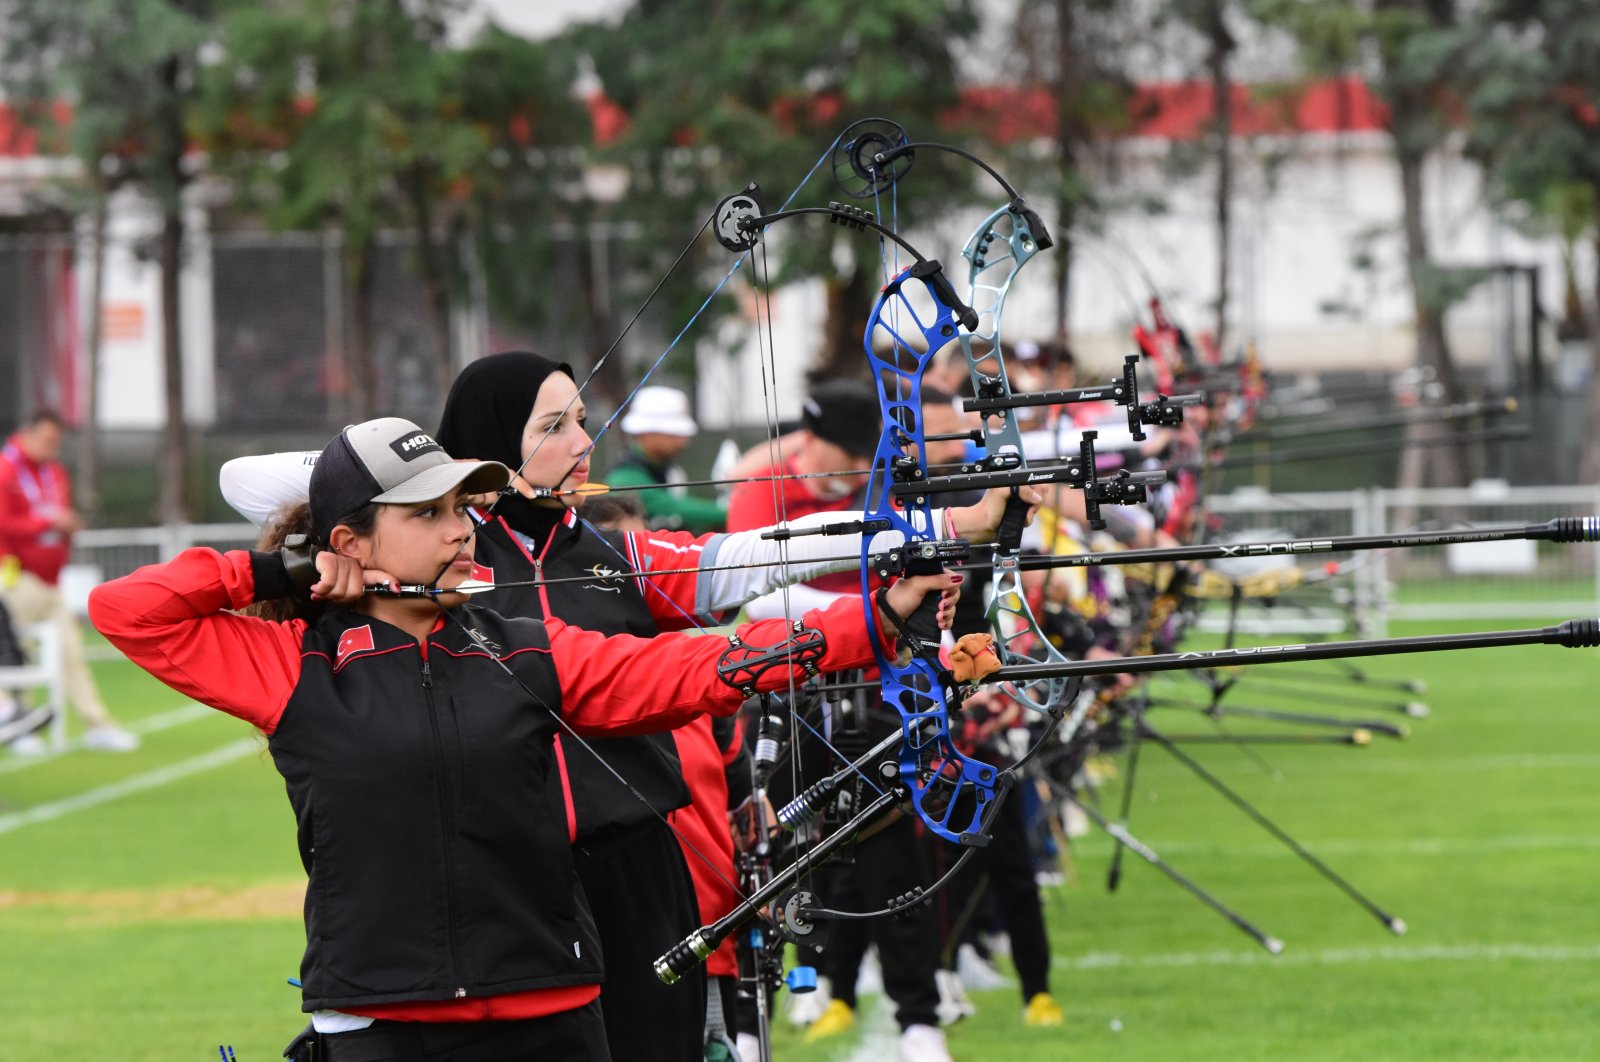 Int’l Kahraman Bagatir Spring Arrows Archery dimulai di Antalya